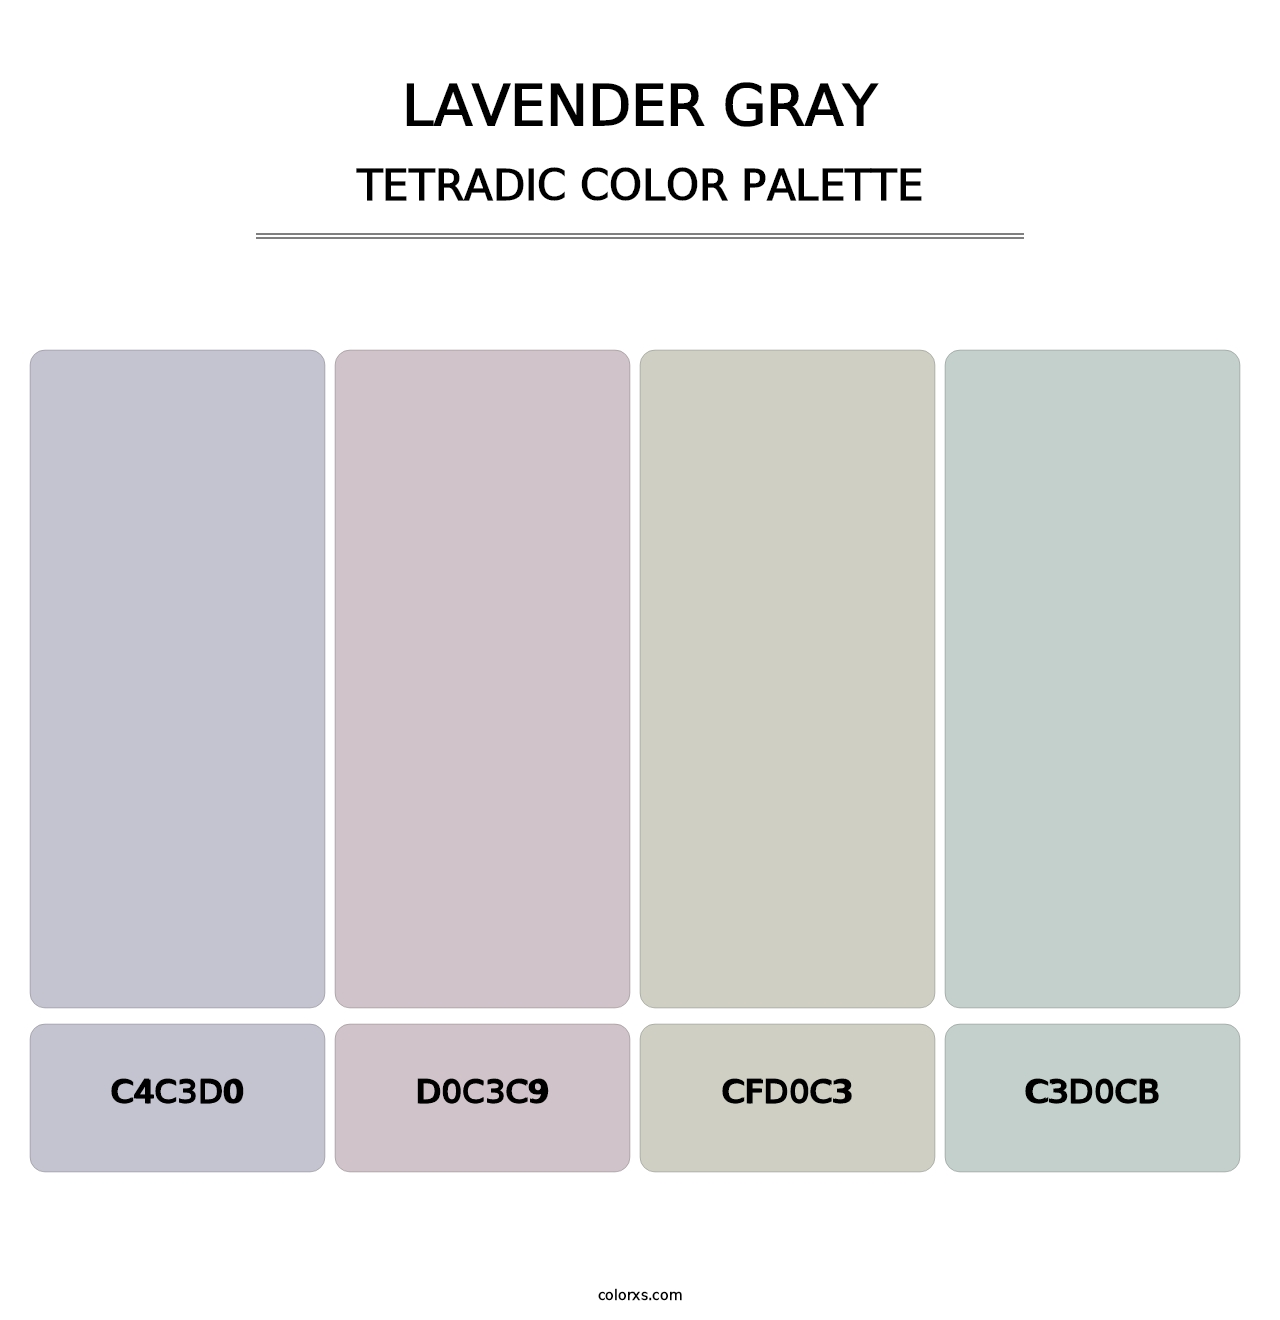 Lavender Gray - Tetradic Color Palette